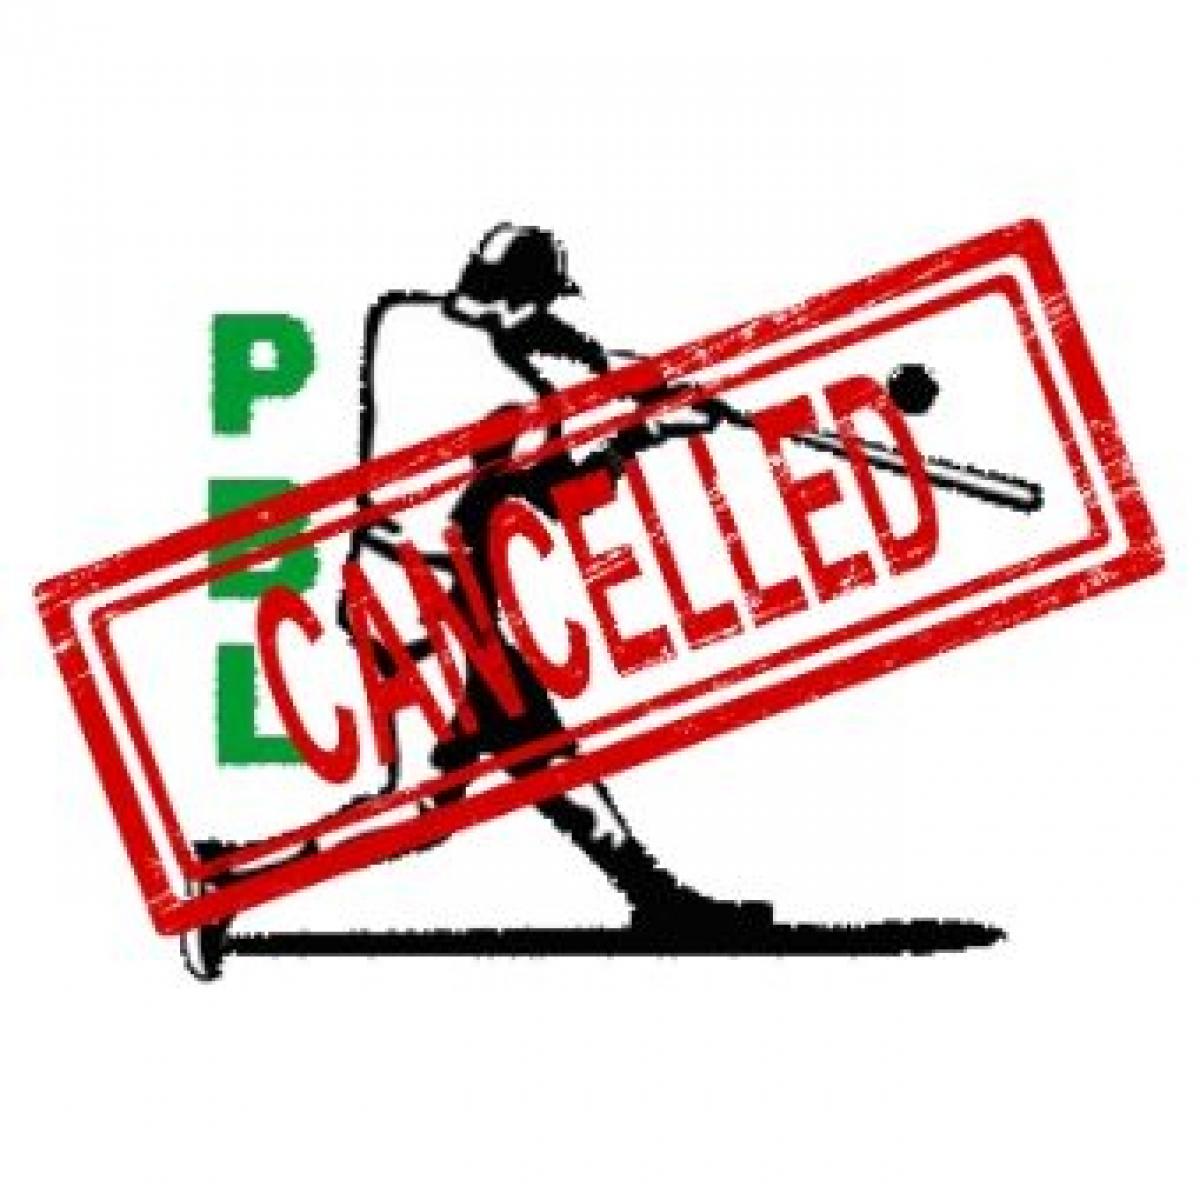 PBL Cancels 2020 Season